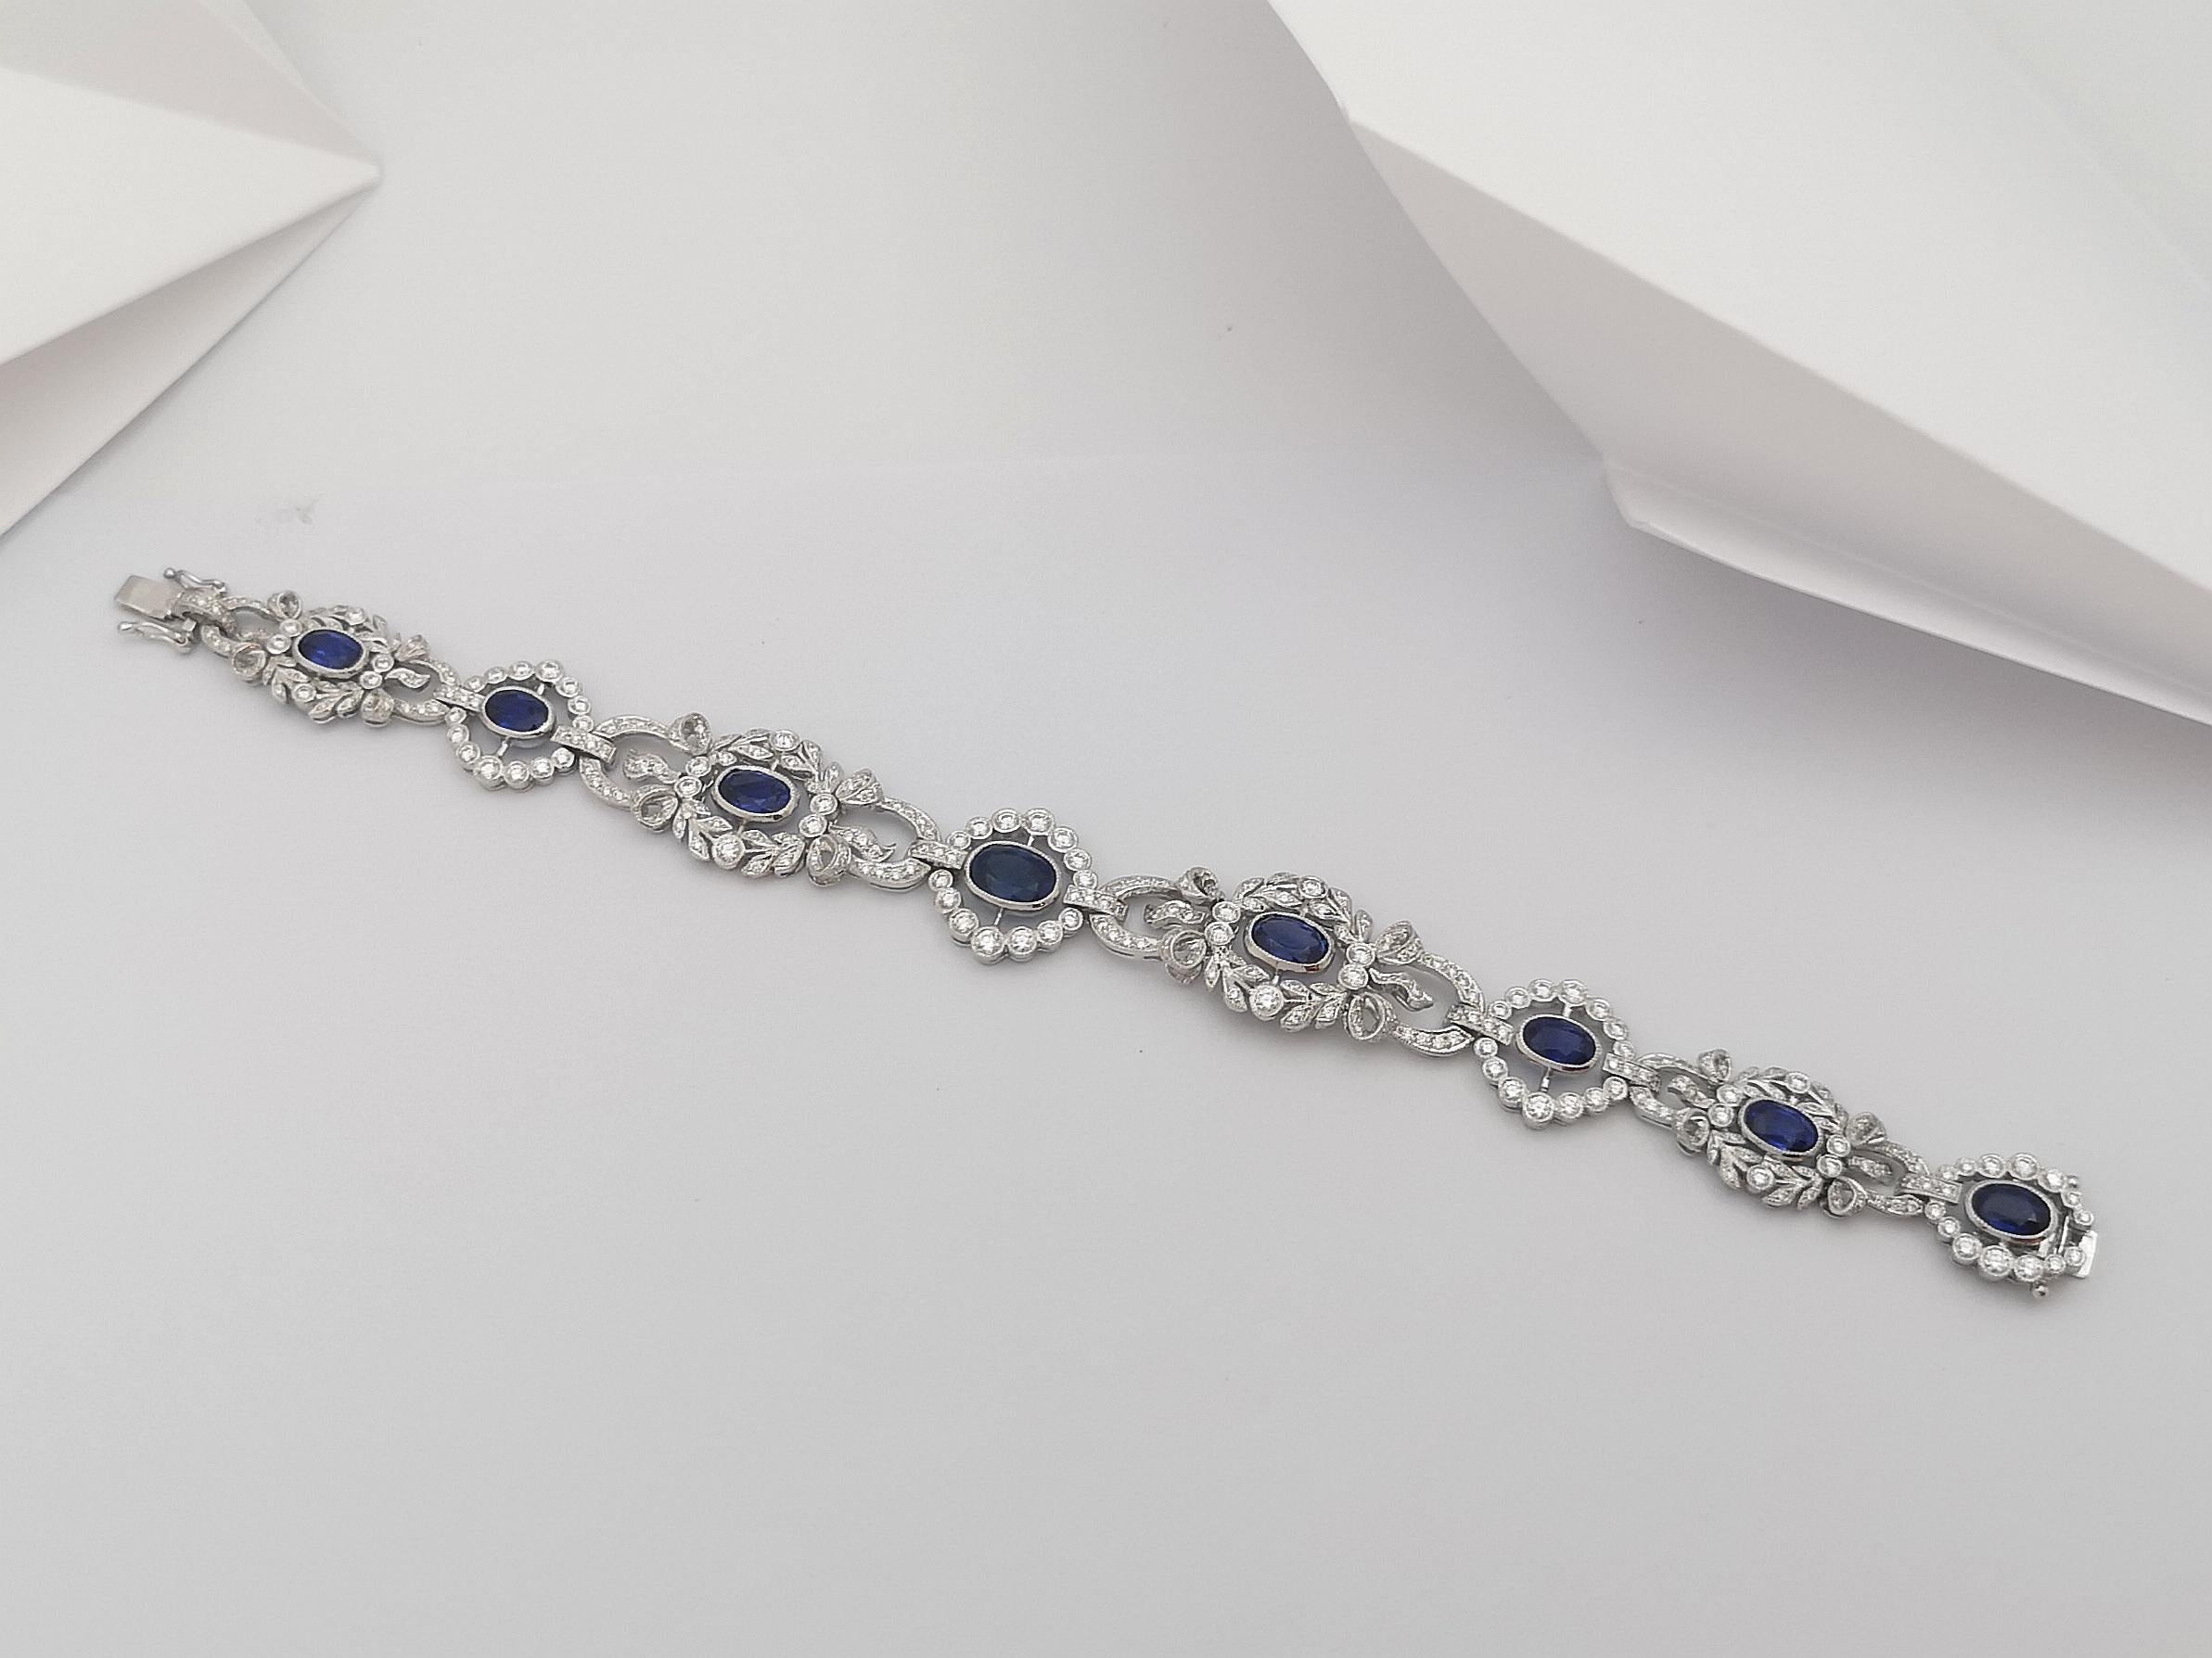  Blue Sapphire with Diamond Bracelet set in 18 Karat White Gold Settings For Sale 1